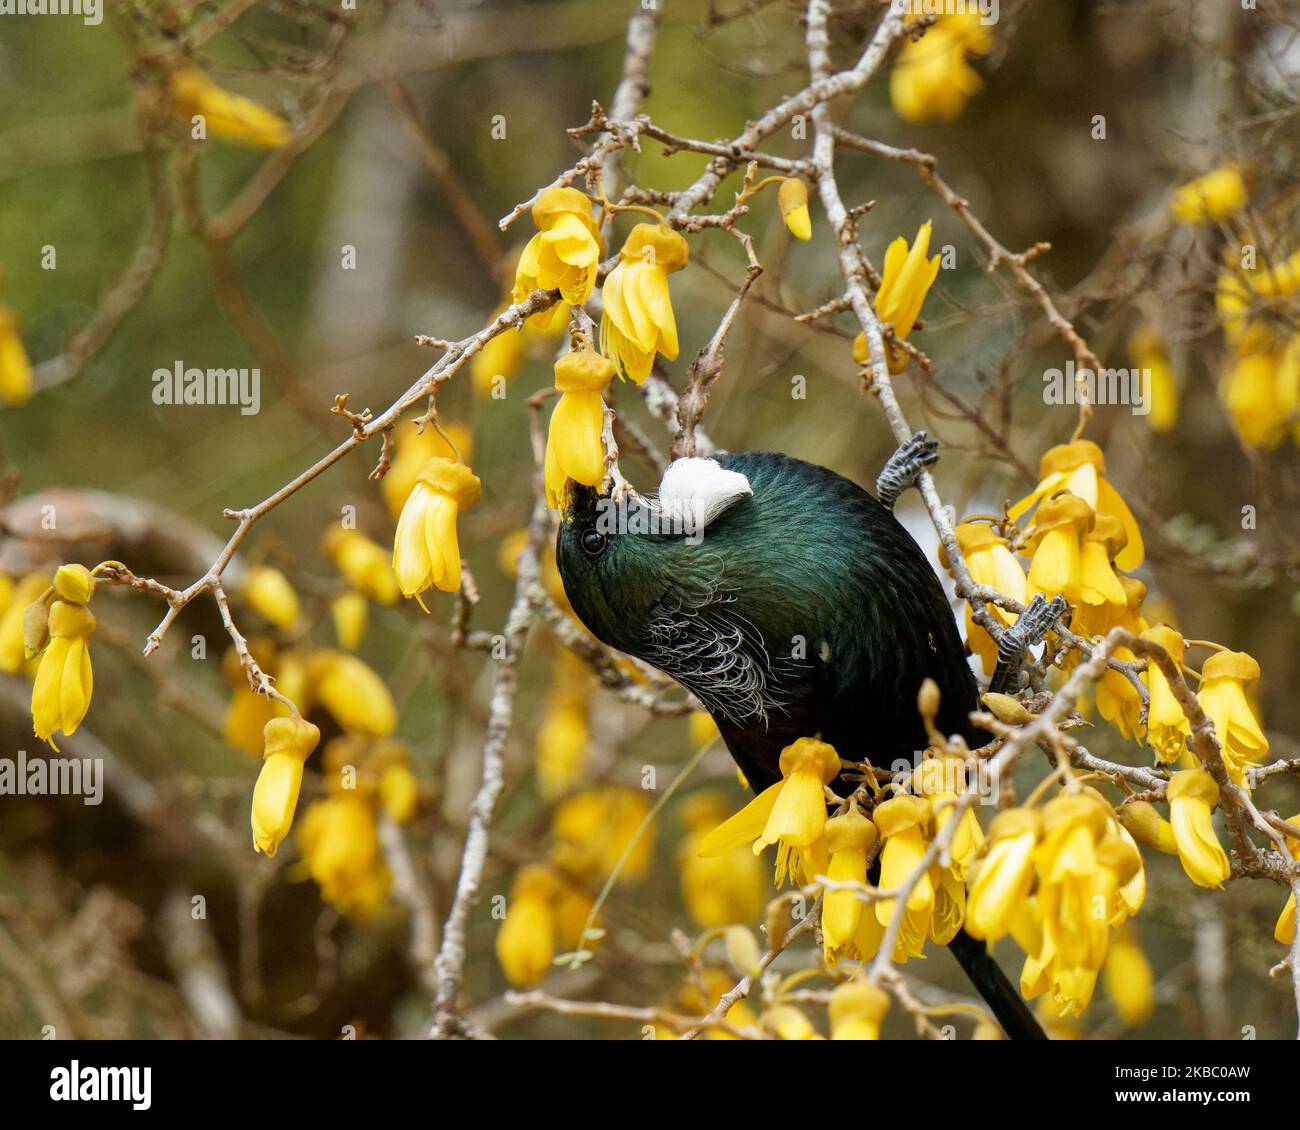 Tui, endemic passerine bird of Aotearoa / New Zealand, feeding on kowhai tree flower nectar. The flower stamen depositing yellow pollen on its head. Stock Photo